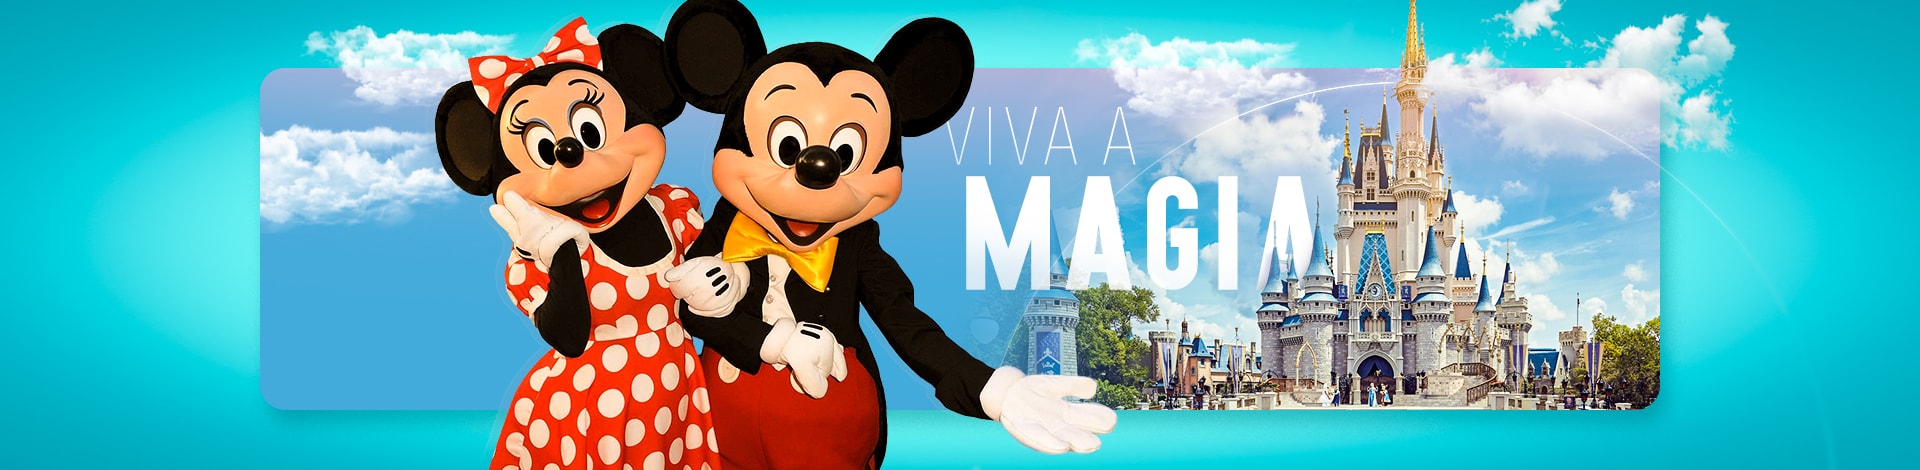 Viva a magia - Disney